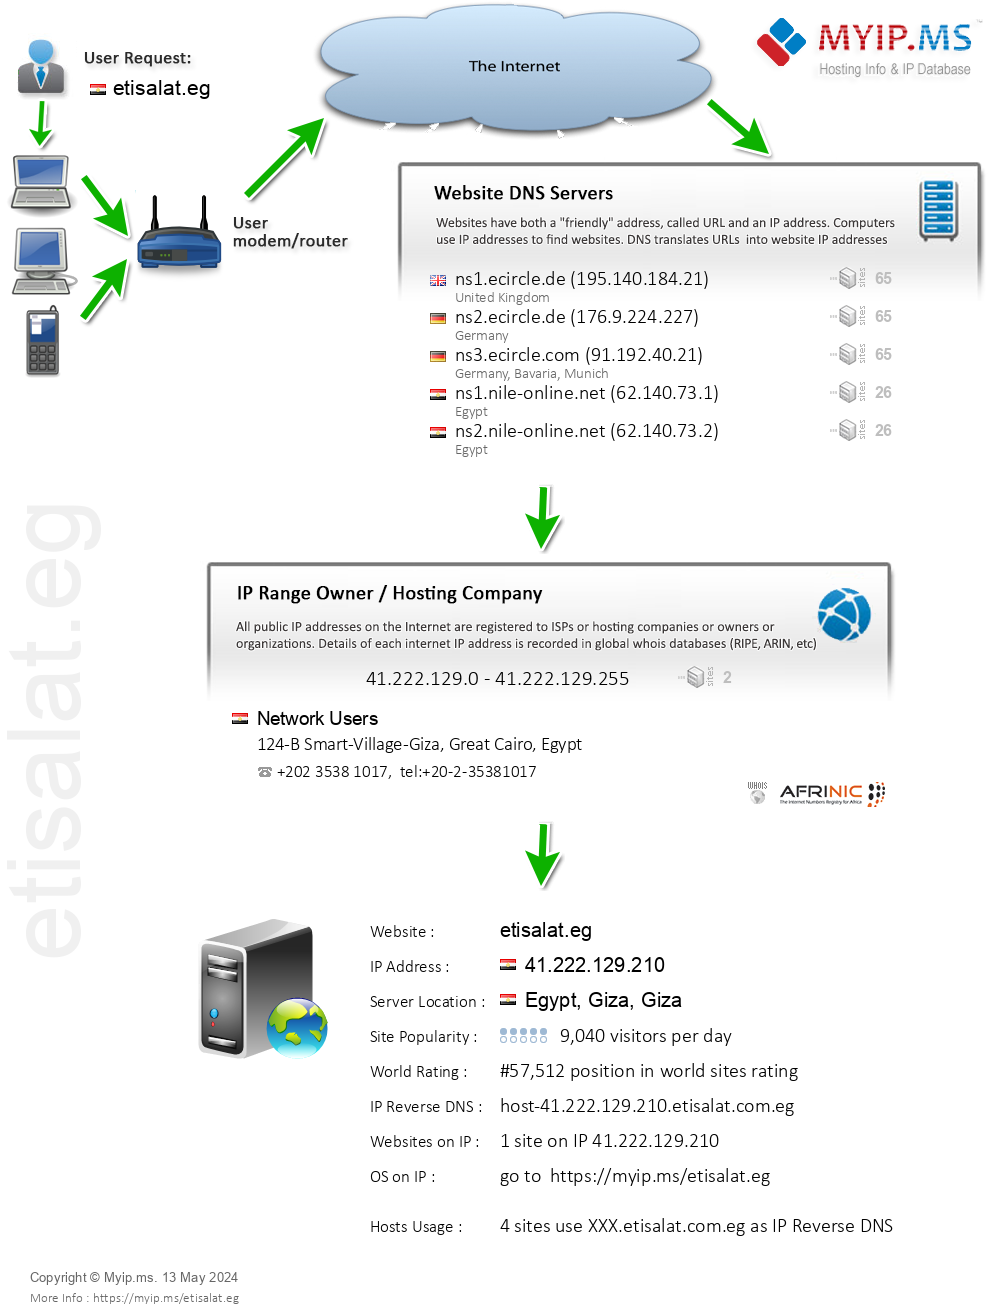 Etisalat.eg - Website Hosting Visual IP Diagram